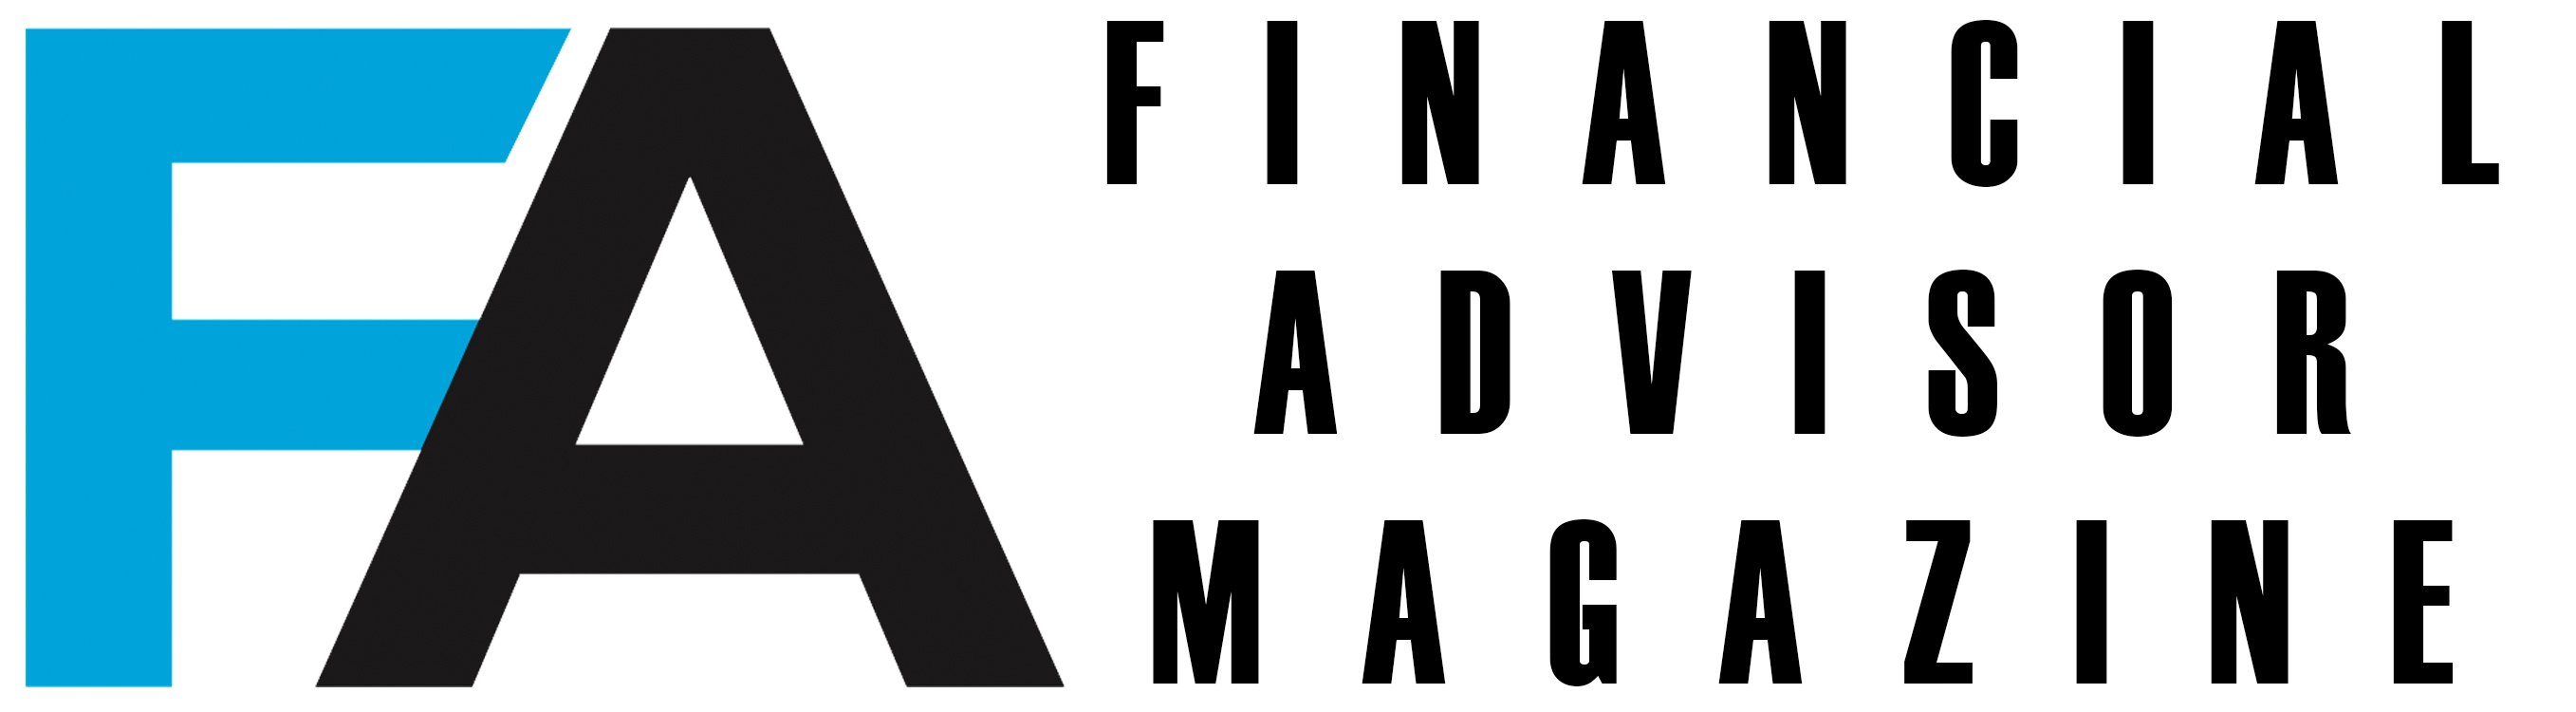 Financial-Advisor-Magazine-logo-modified-1